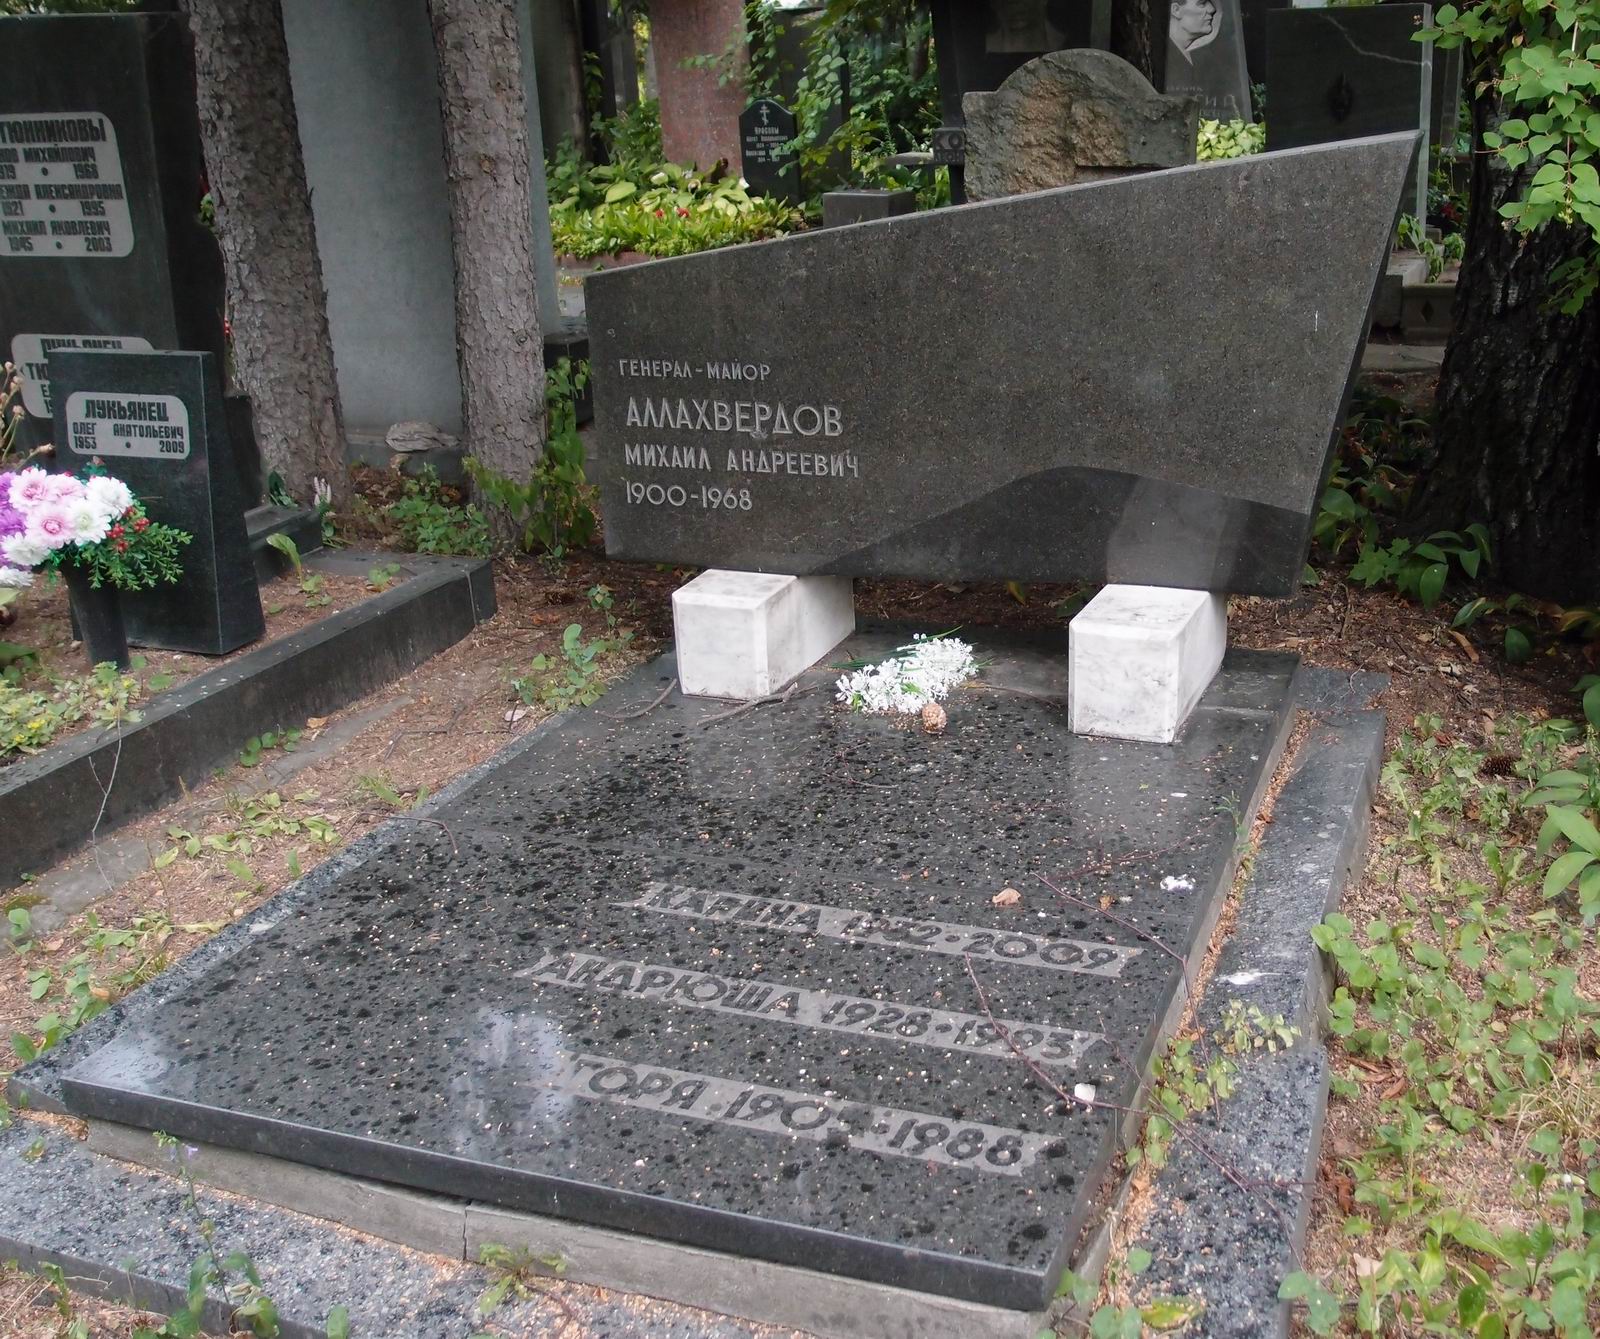 Памятник на могиле Аллахвердова М.А. (1900-1968), на Новодевичьем кладбище (7-5-5).